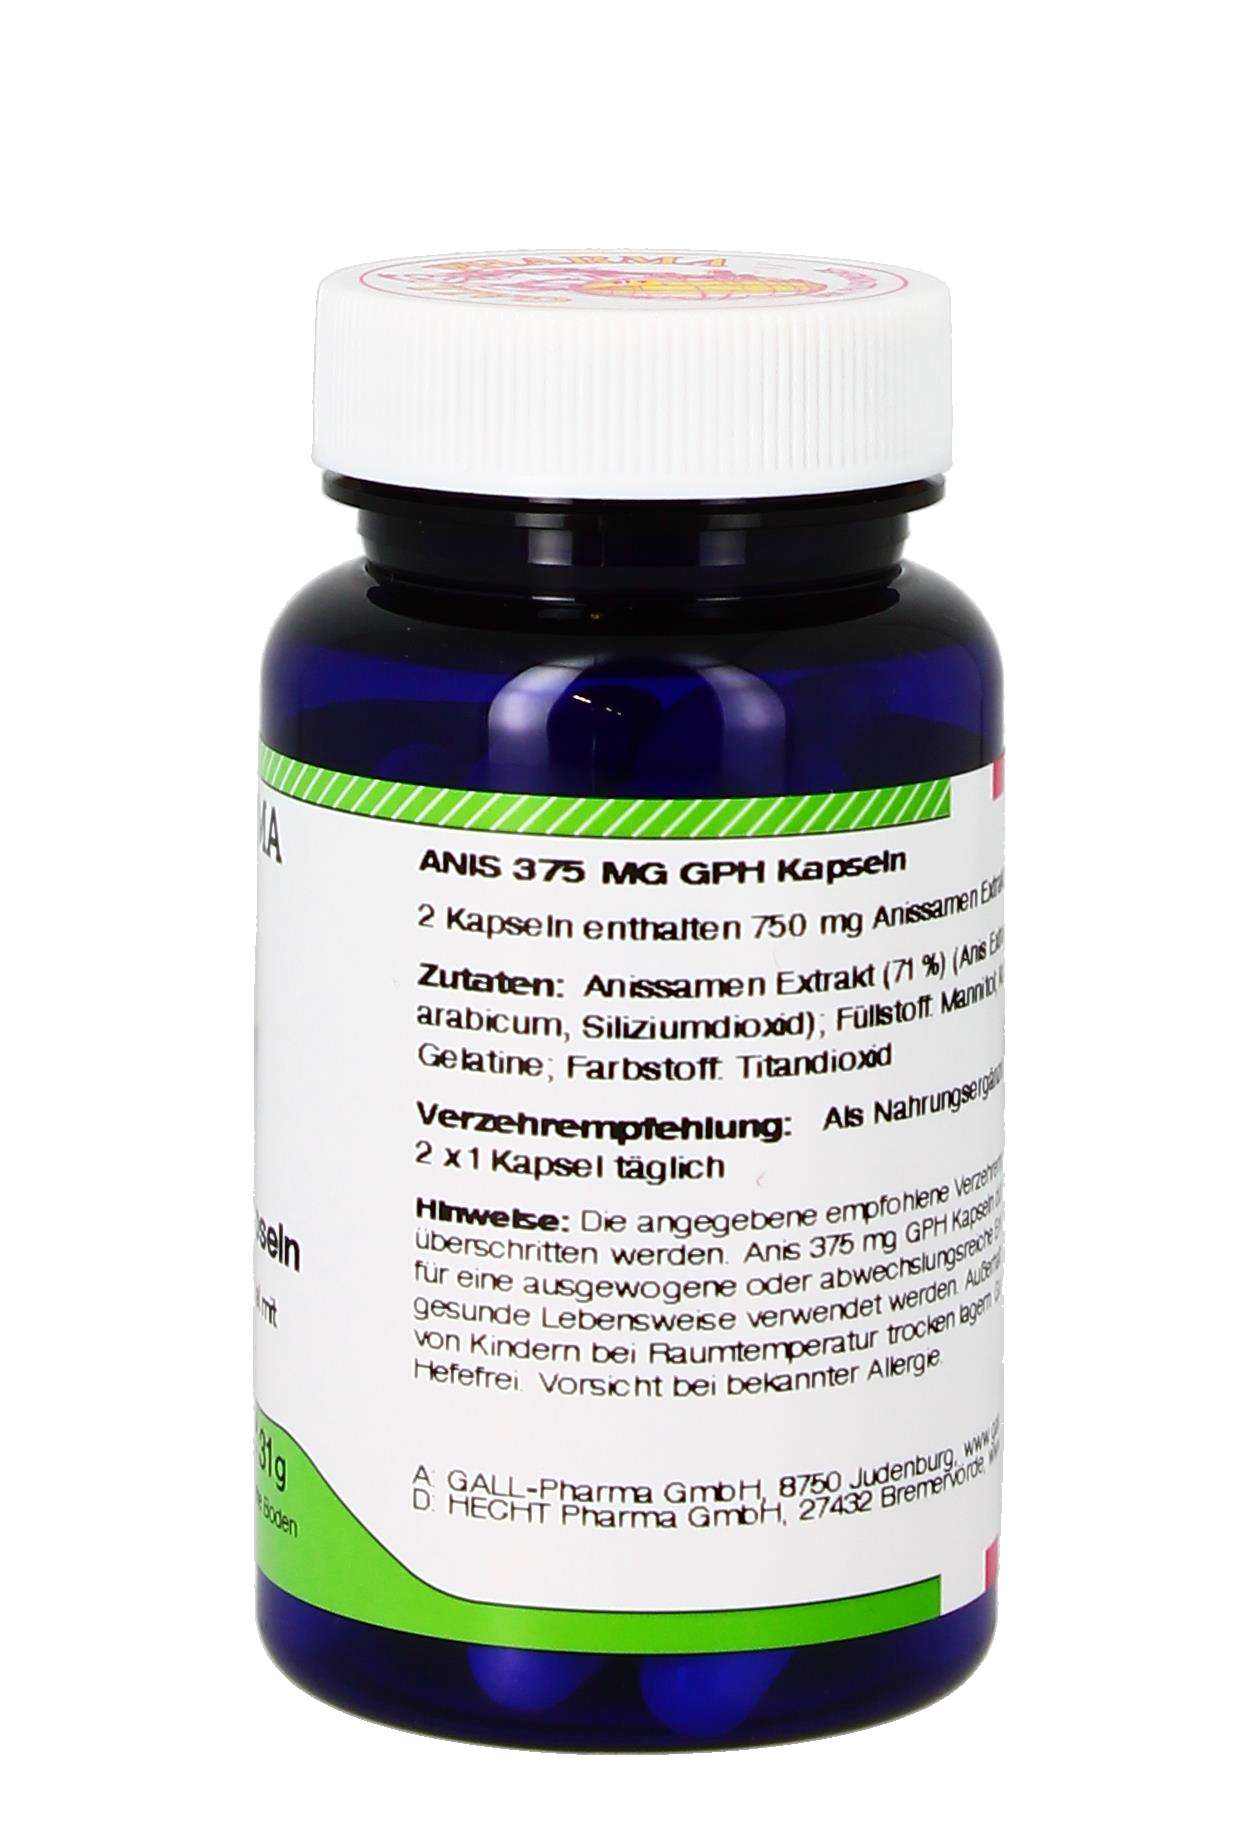 Anis 375 mg GPH Kapseln